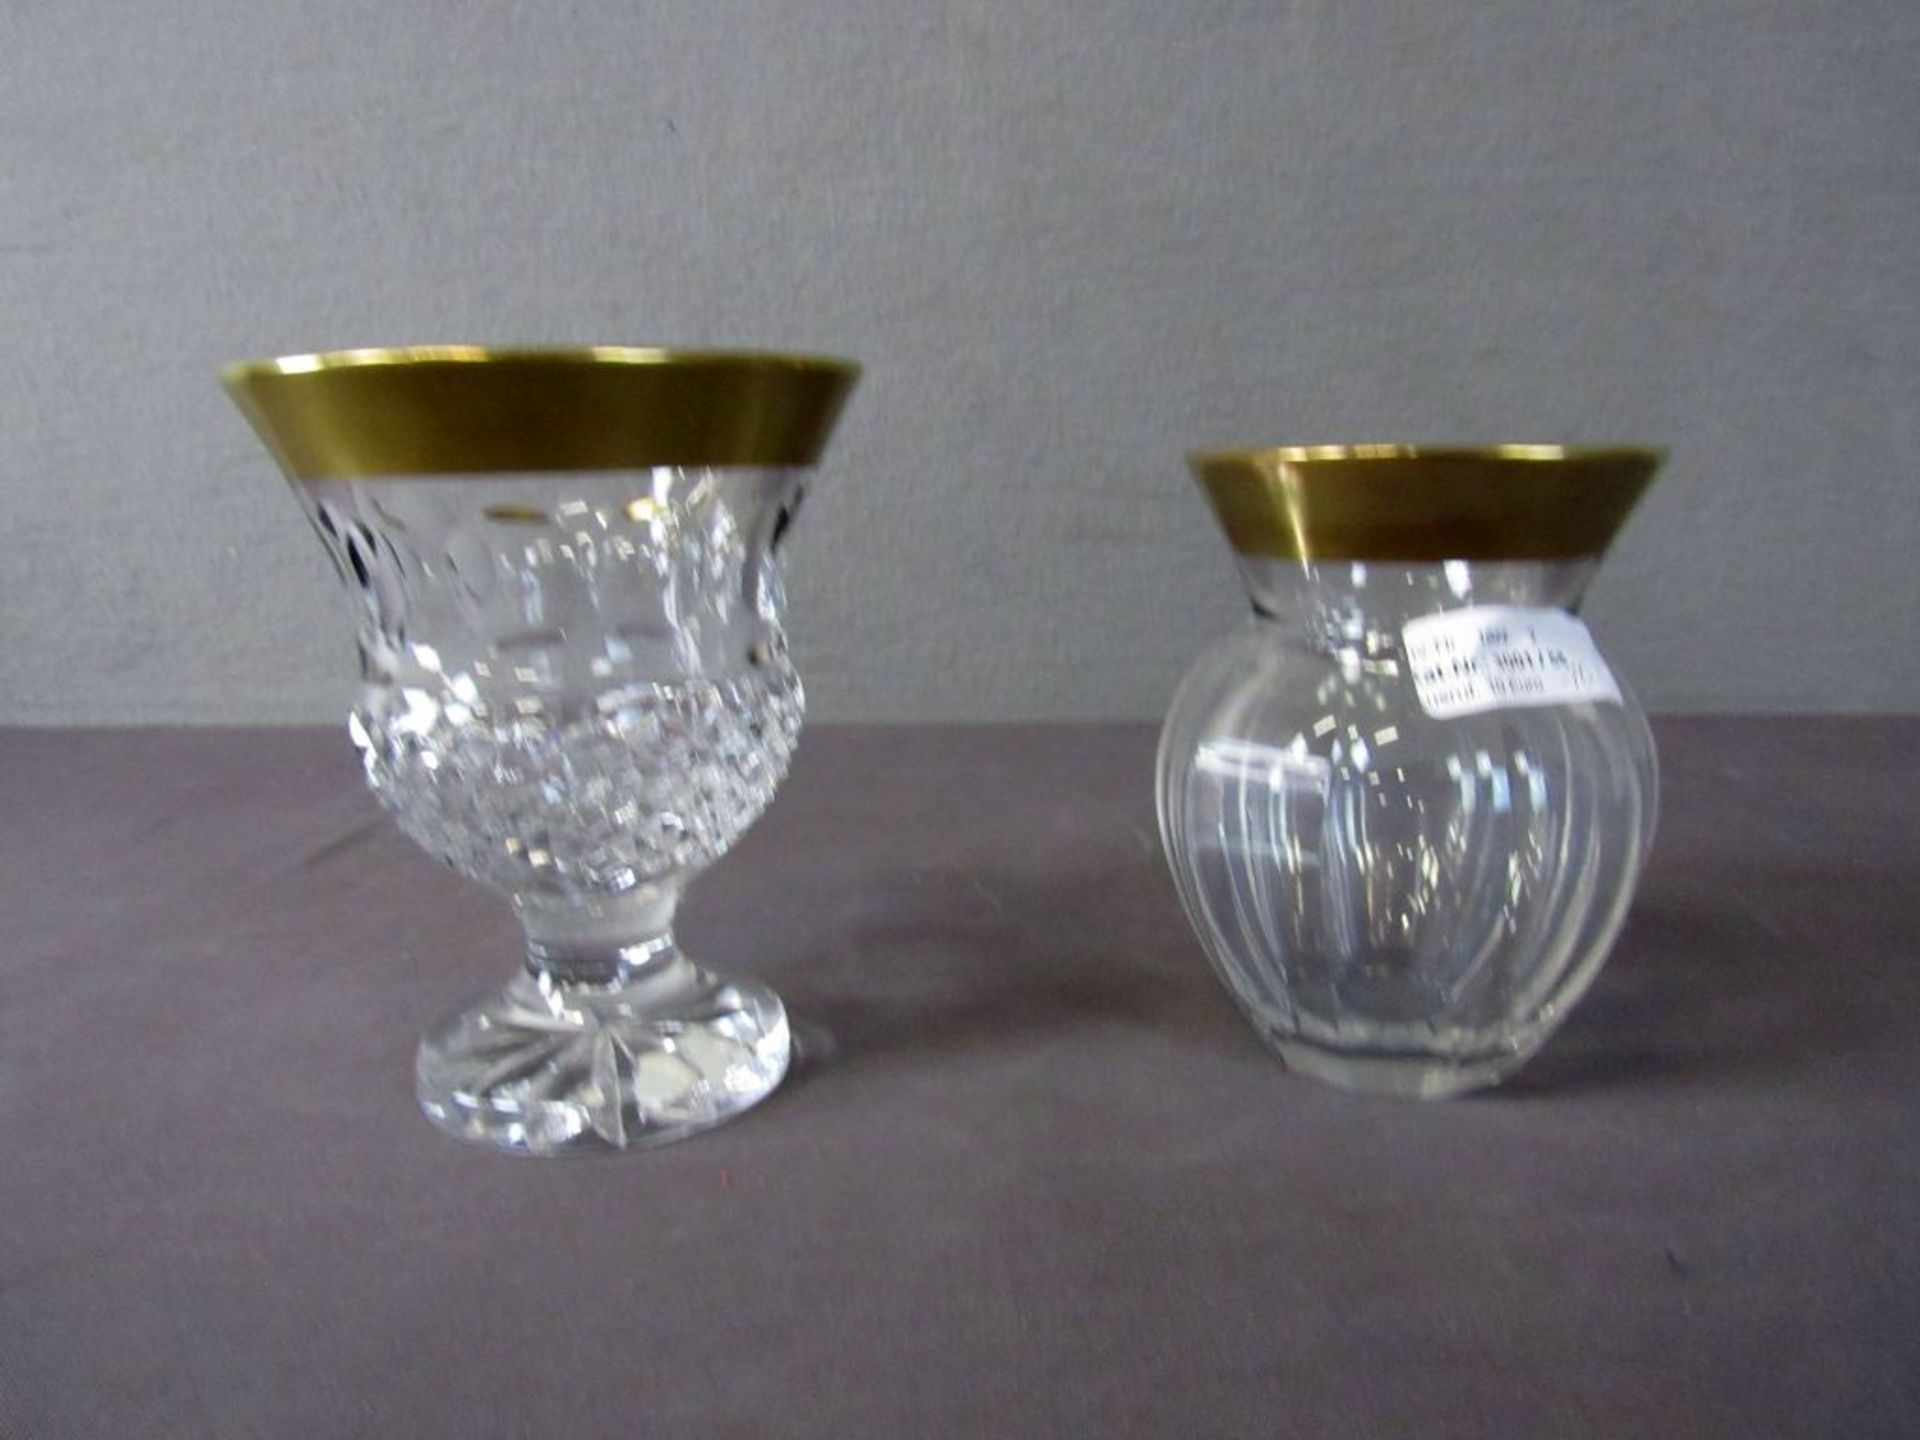 Pokalglas und Vase Kristallglas mit